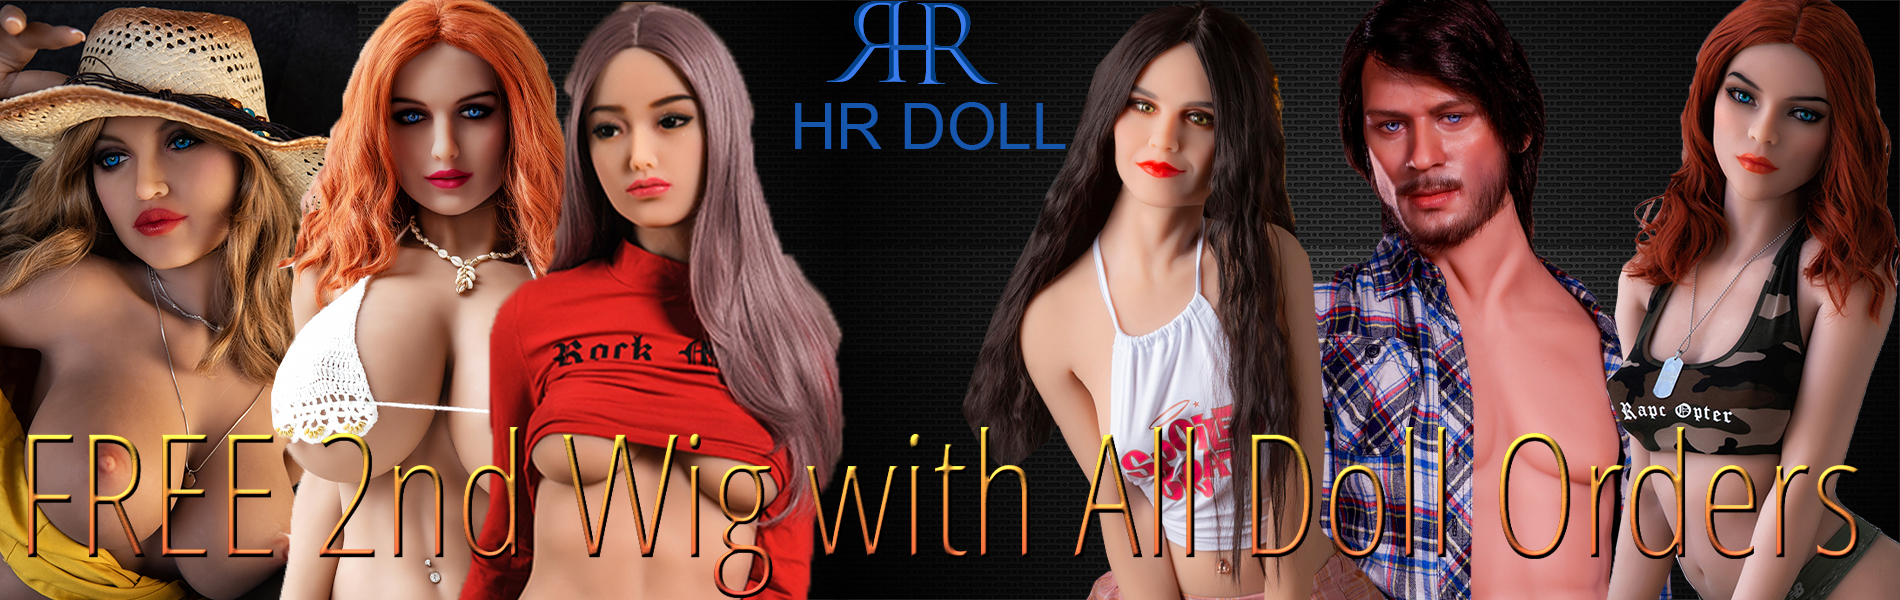 HR Dolls